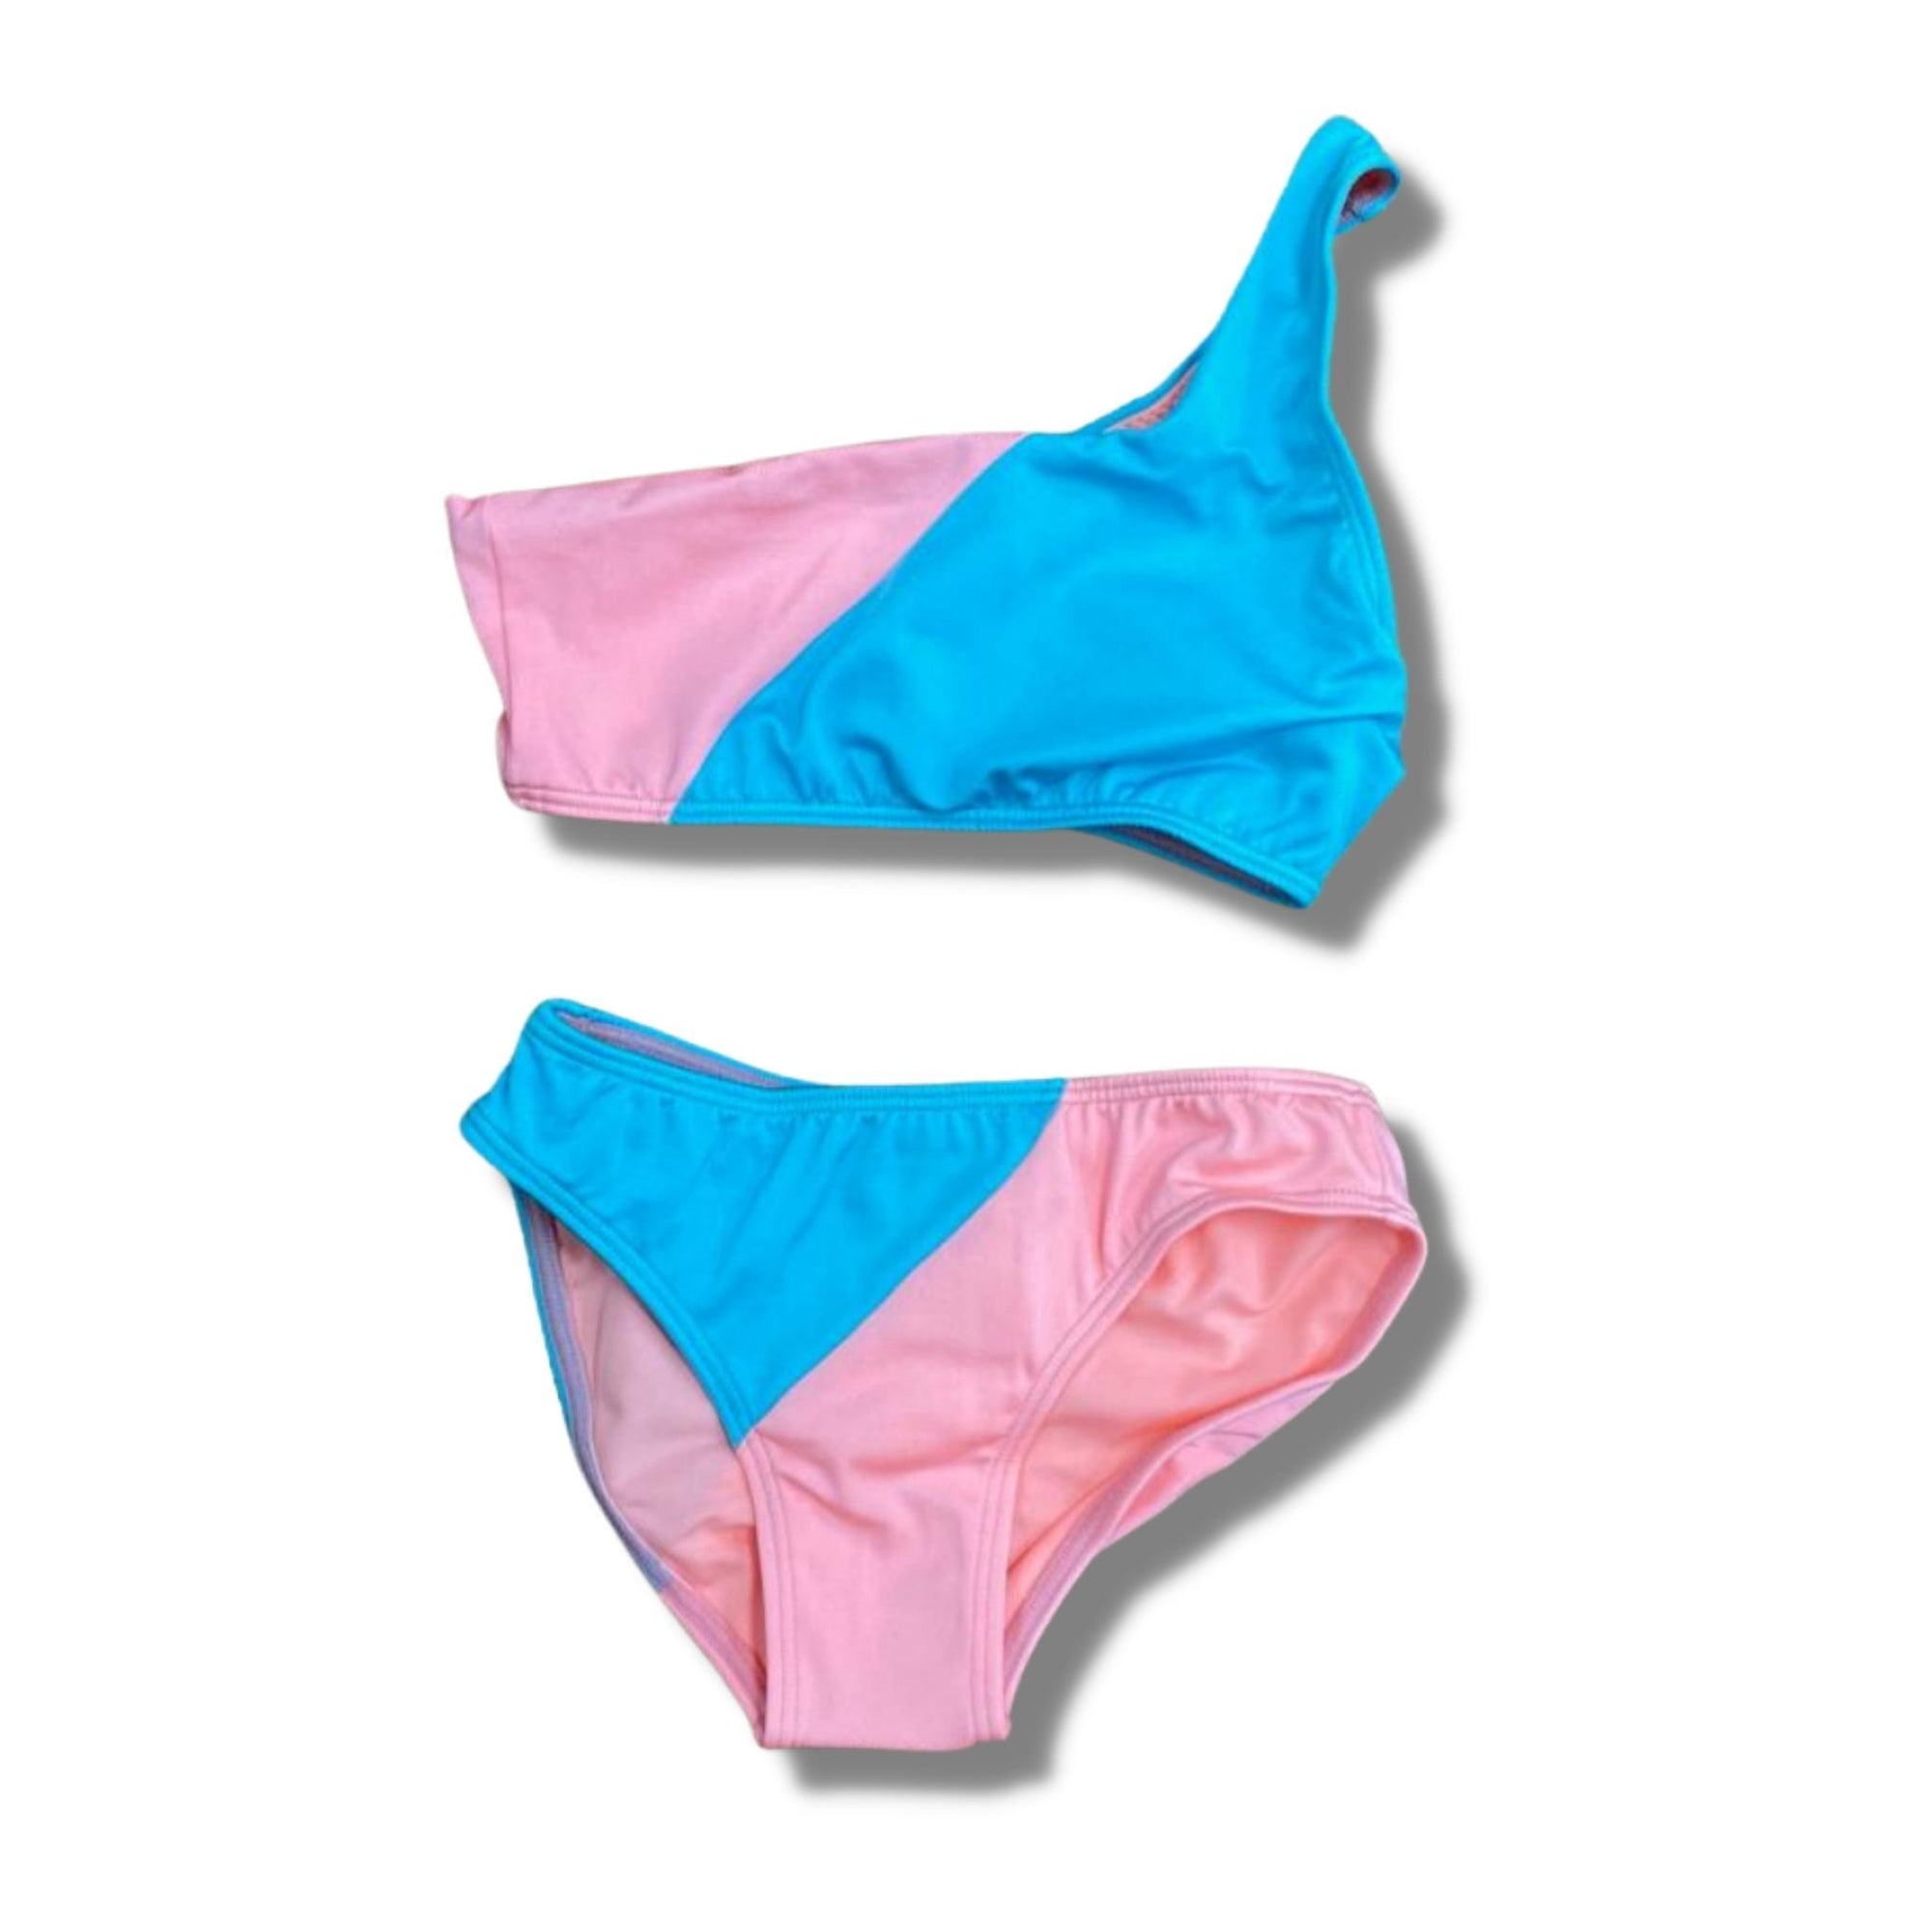 Little Peixoto Rose Sky Color Block Theo Bikini - a Spirit Animal - Bathing Suit $75-$90 Bathing Suit Color-Rose Sky Color Block